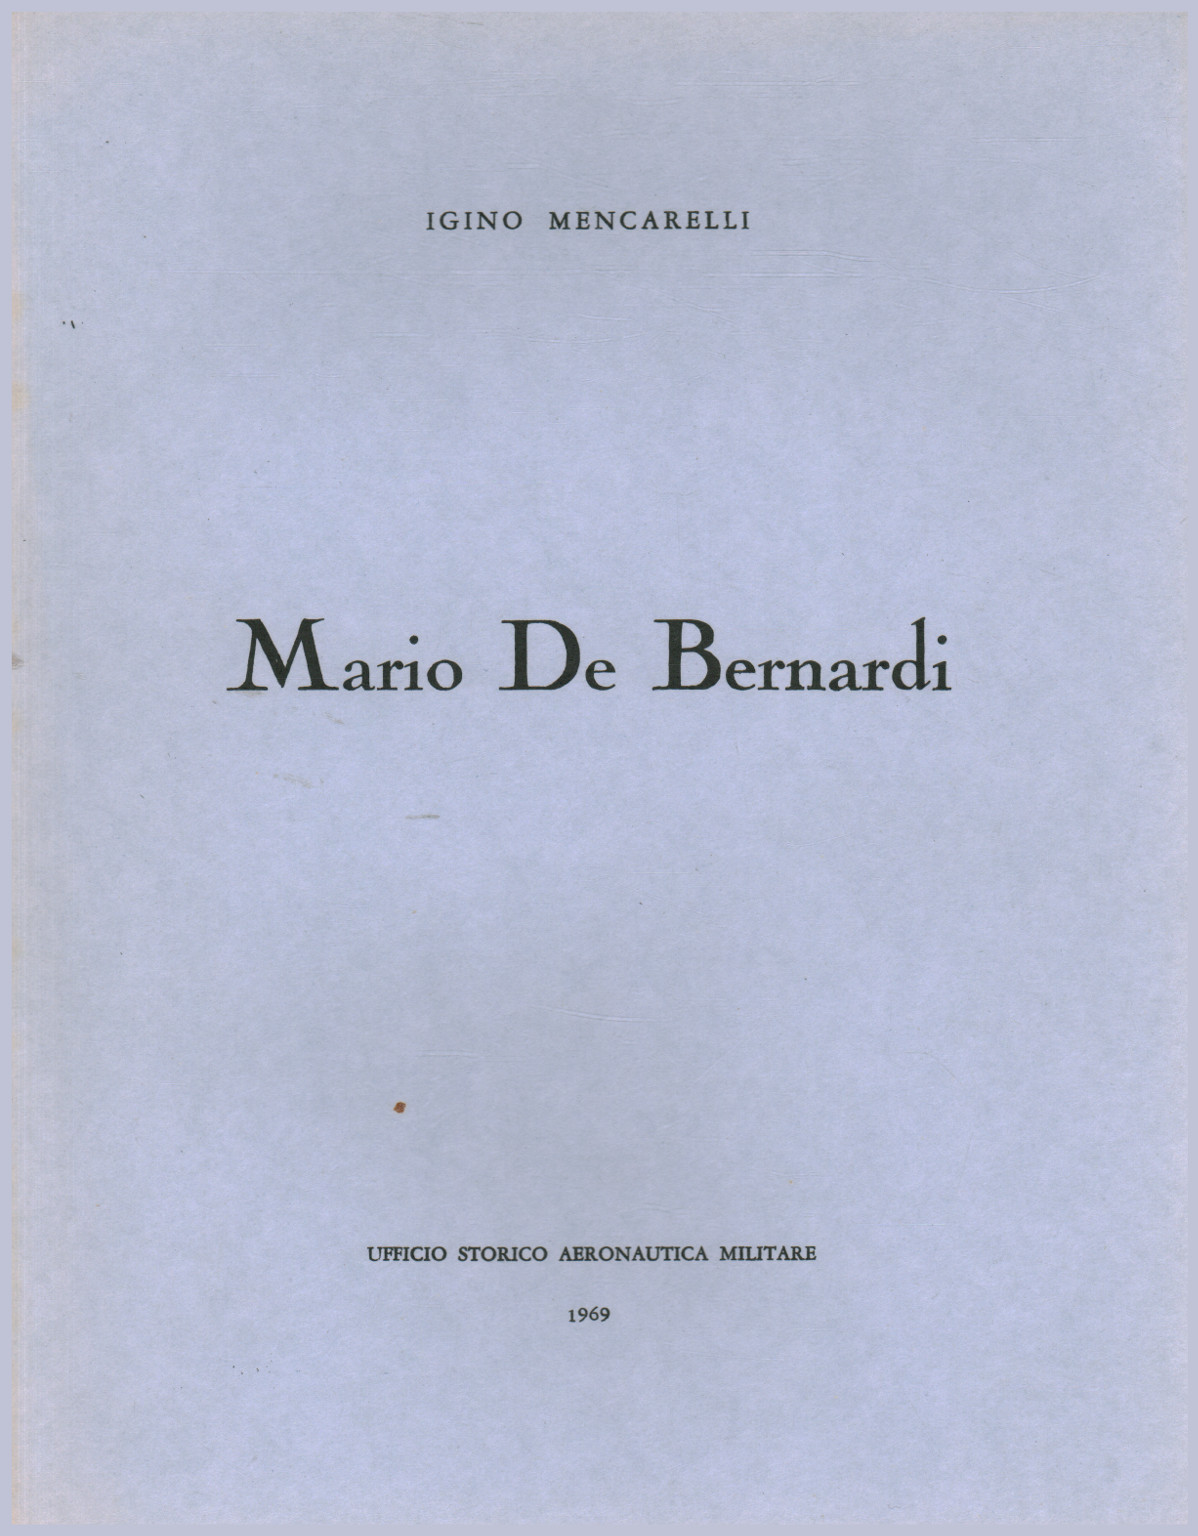 Mario De Bernardi, Igino Mencarelli